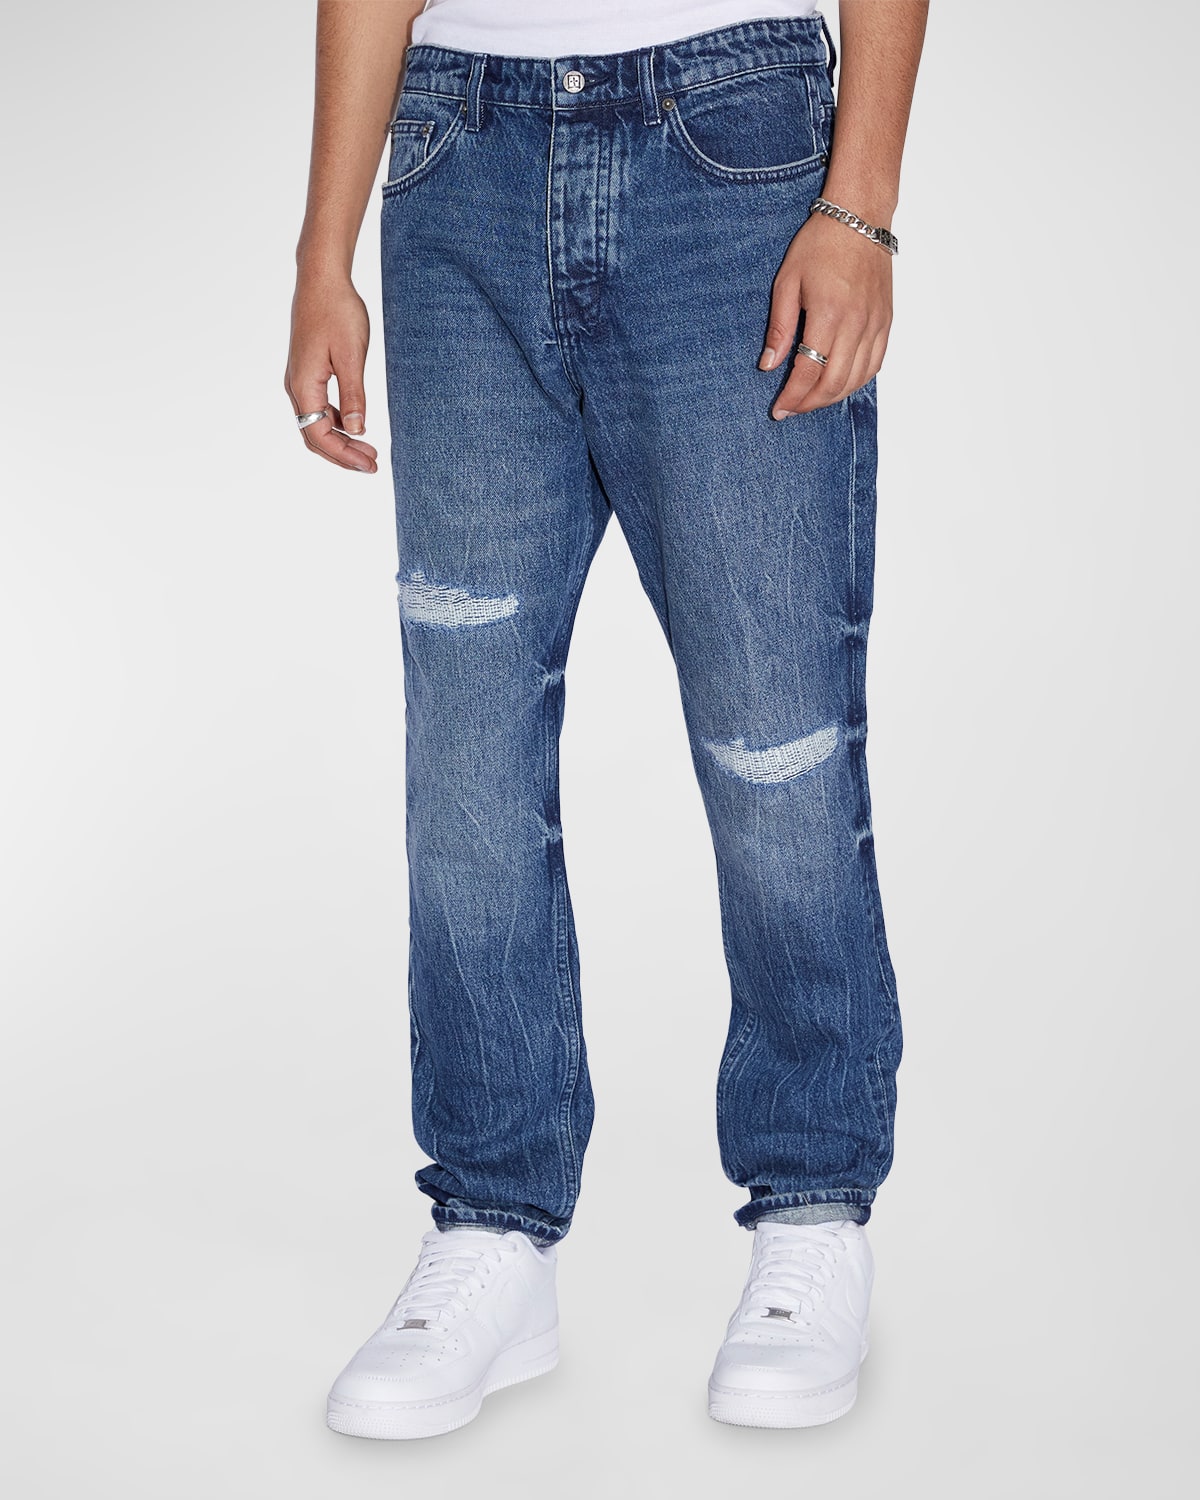 Men's Wolfgang Hilite Trashed Jeans